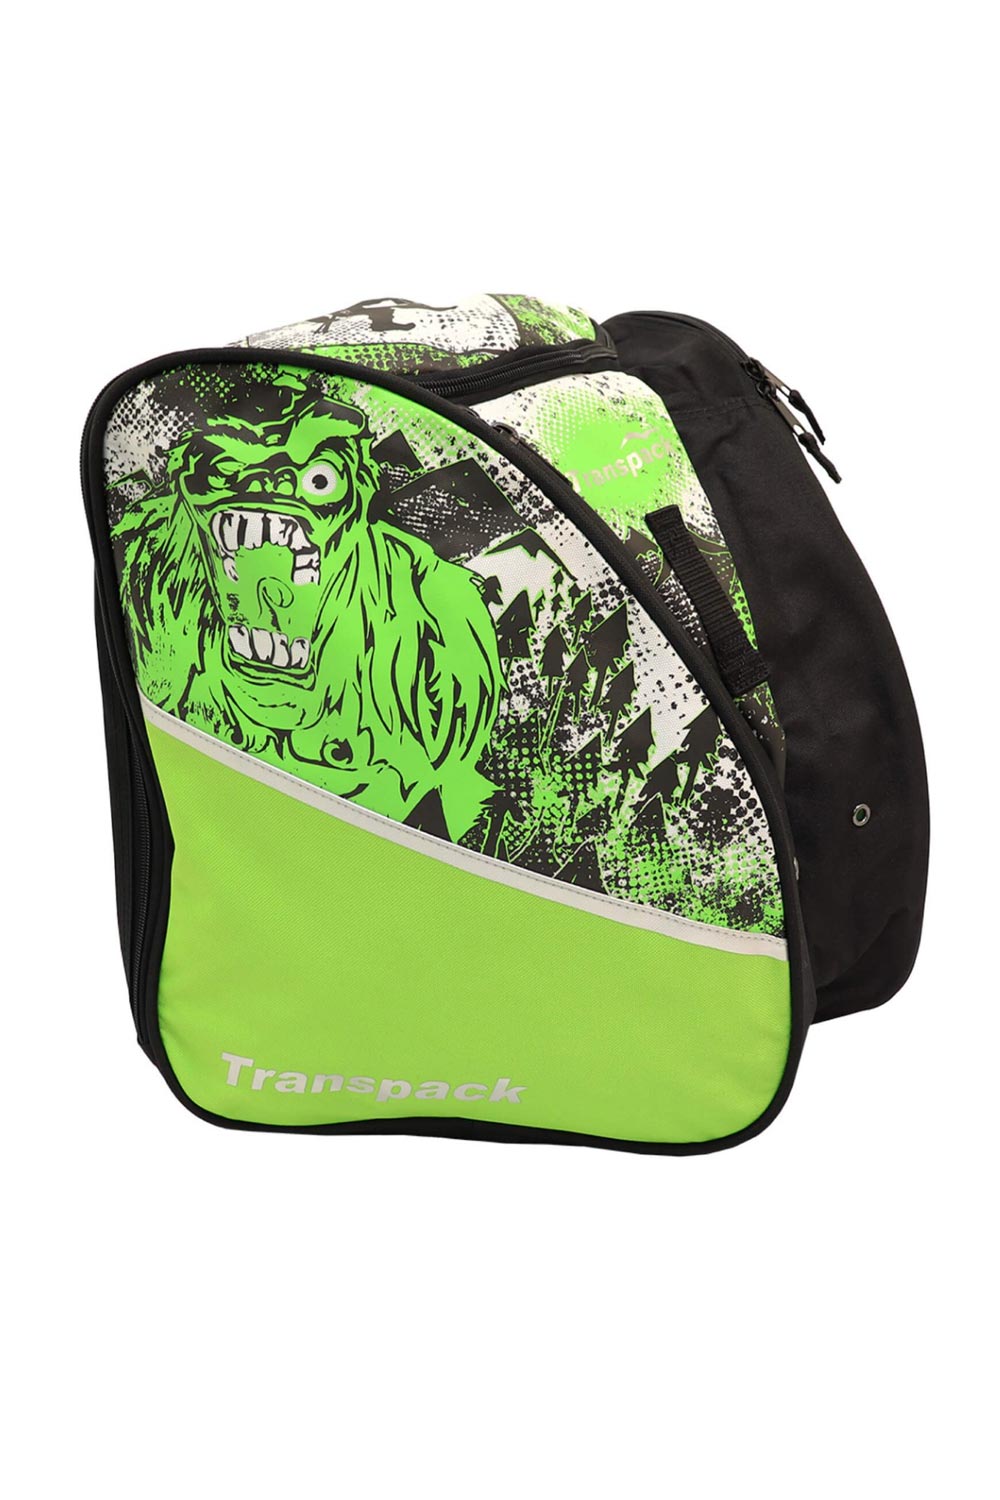 Youth ski boot & gear backpack bag, bright green Yeti pattern